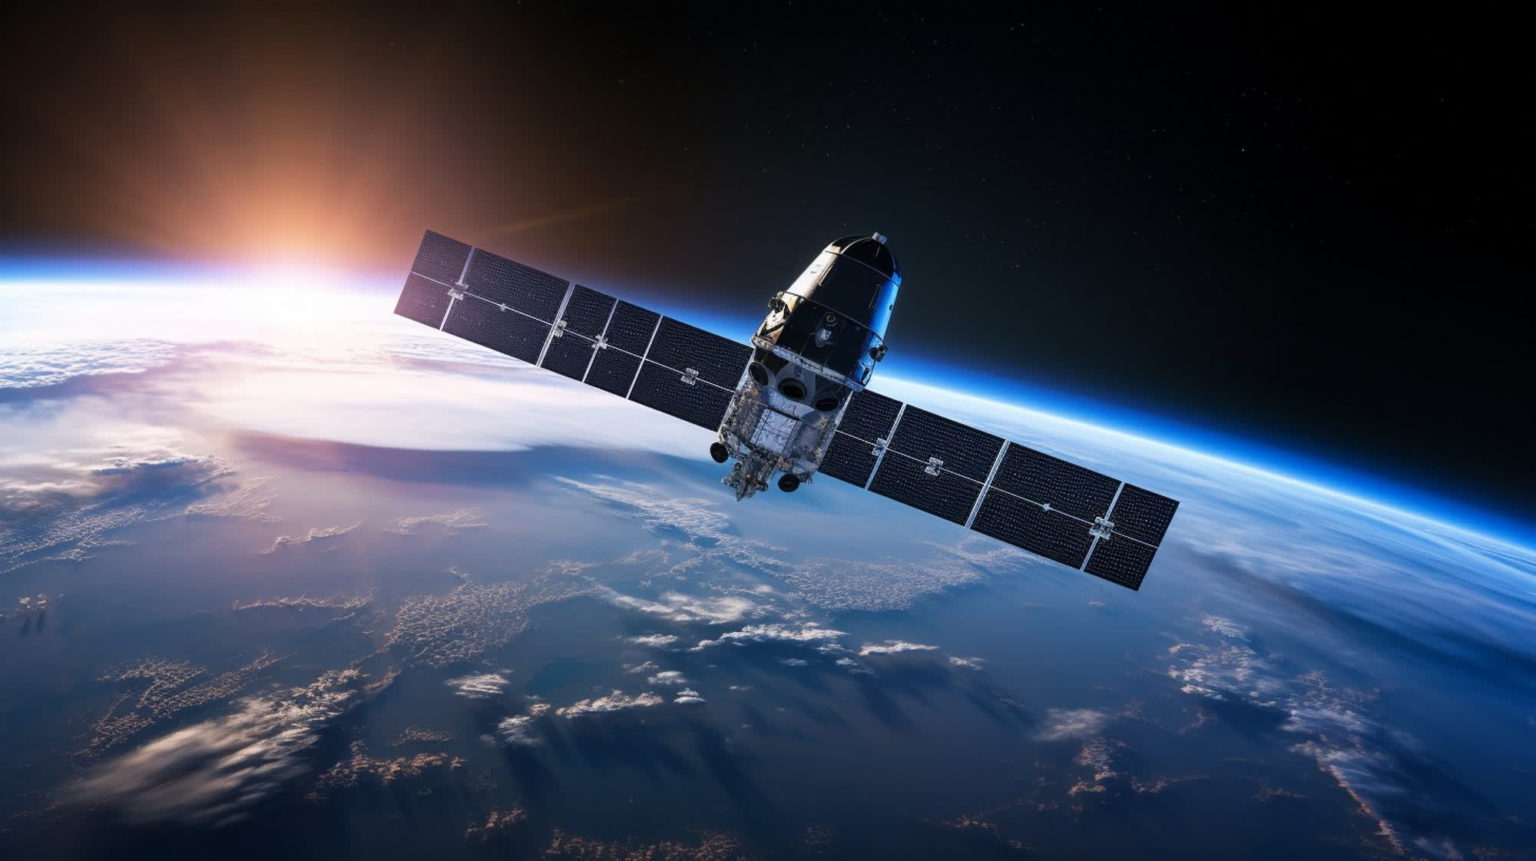 Starlink satellites exchange petabytes of data per day through space laser links